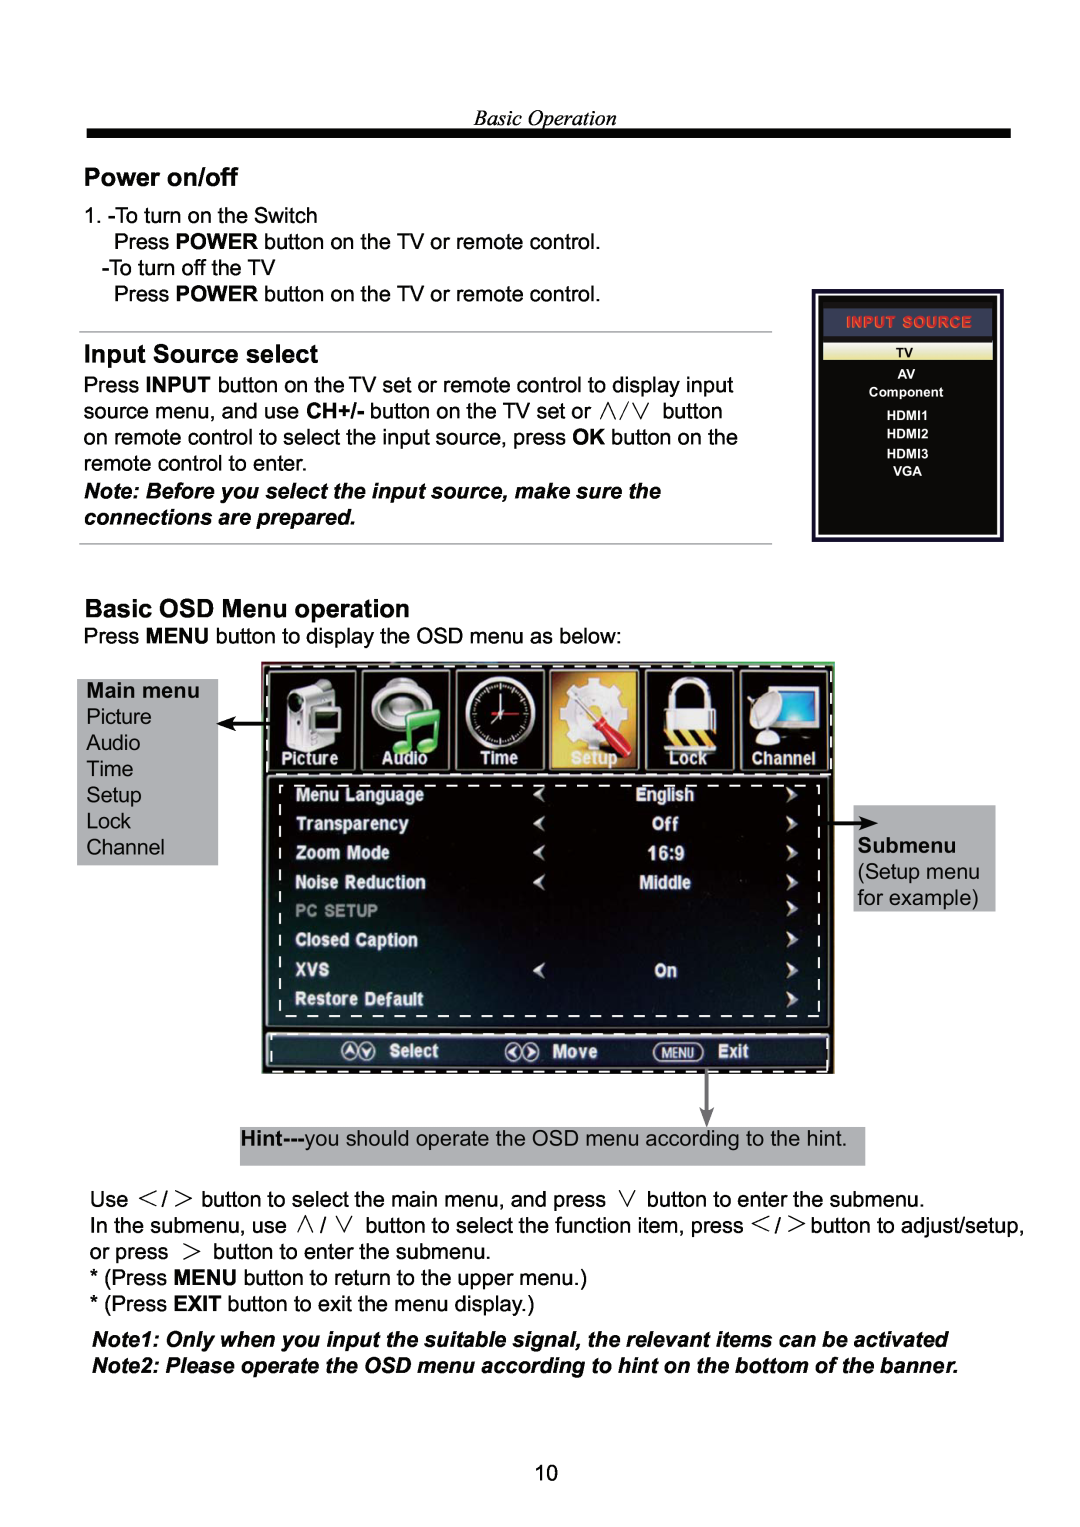 Curtis RLED3218A manual Power on/off, Input Source select, Basic OSD Menu operation, Basic Operation, Main menu 